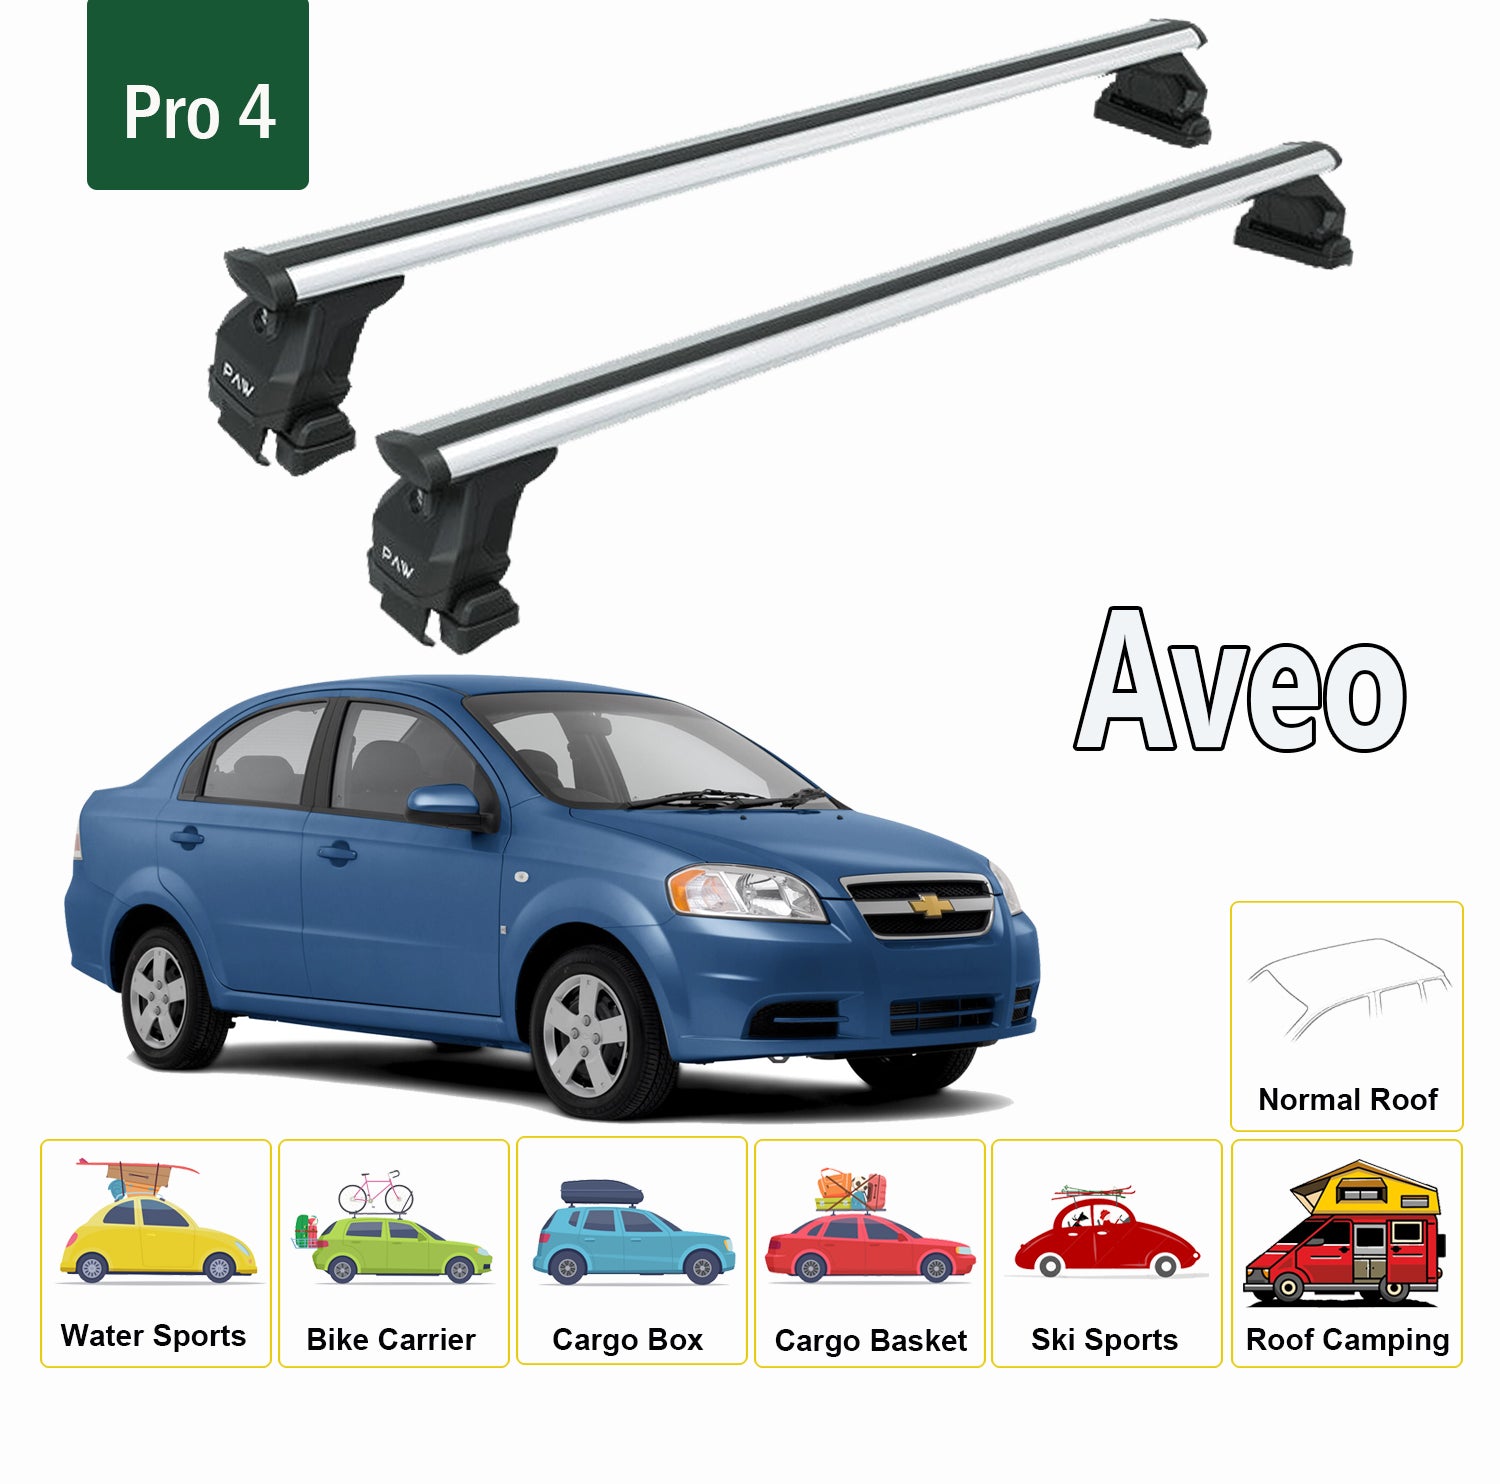 For Chevrolet Aveo 2004-2011 Roof Rack System, Aluminium Cross Bar, Metal Bracket, Normal Roof, Silver